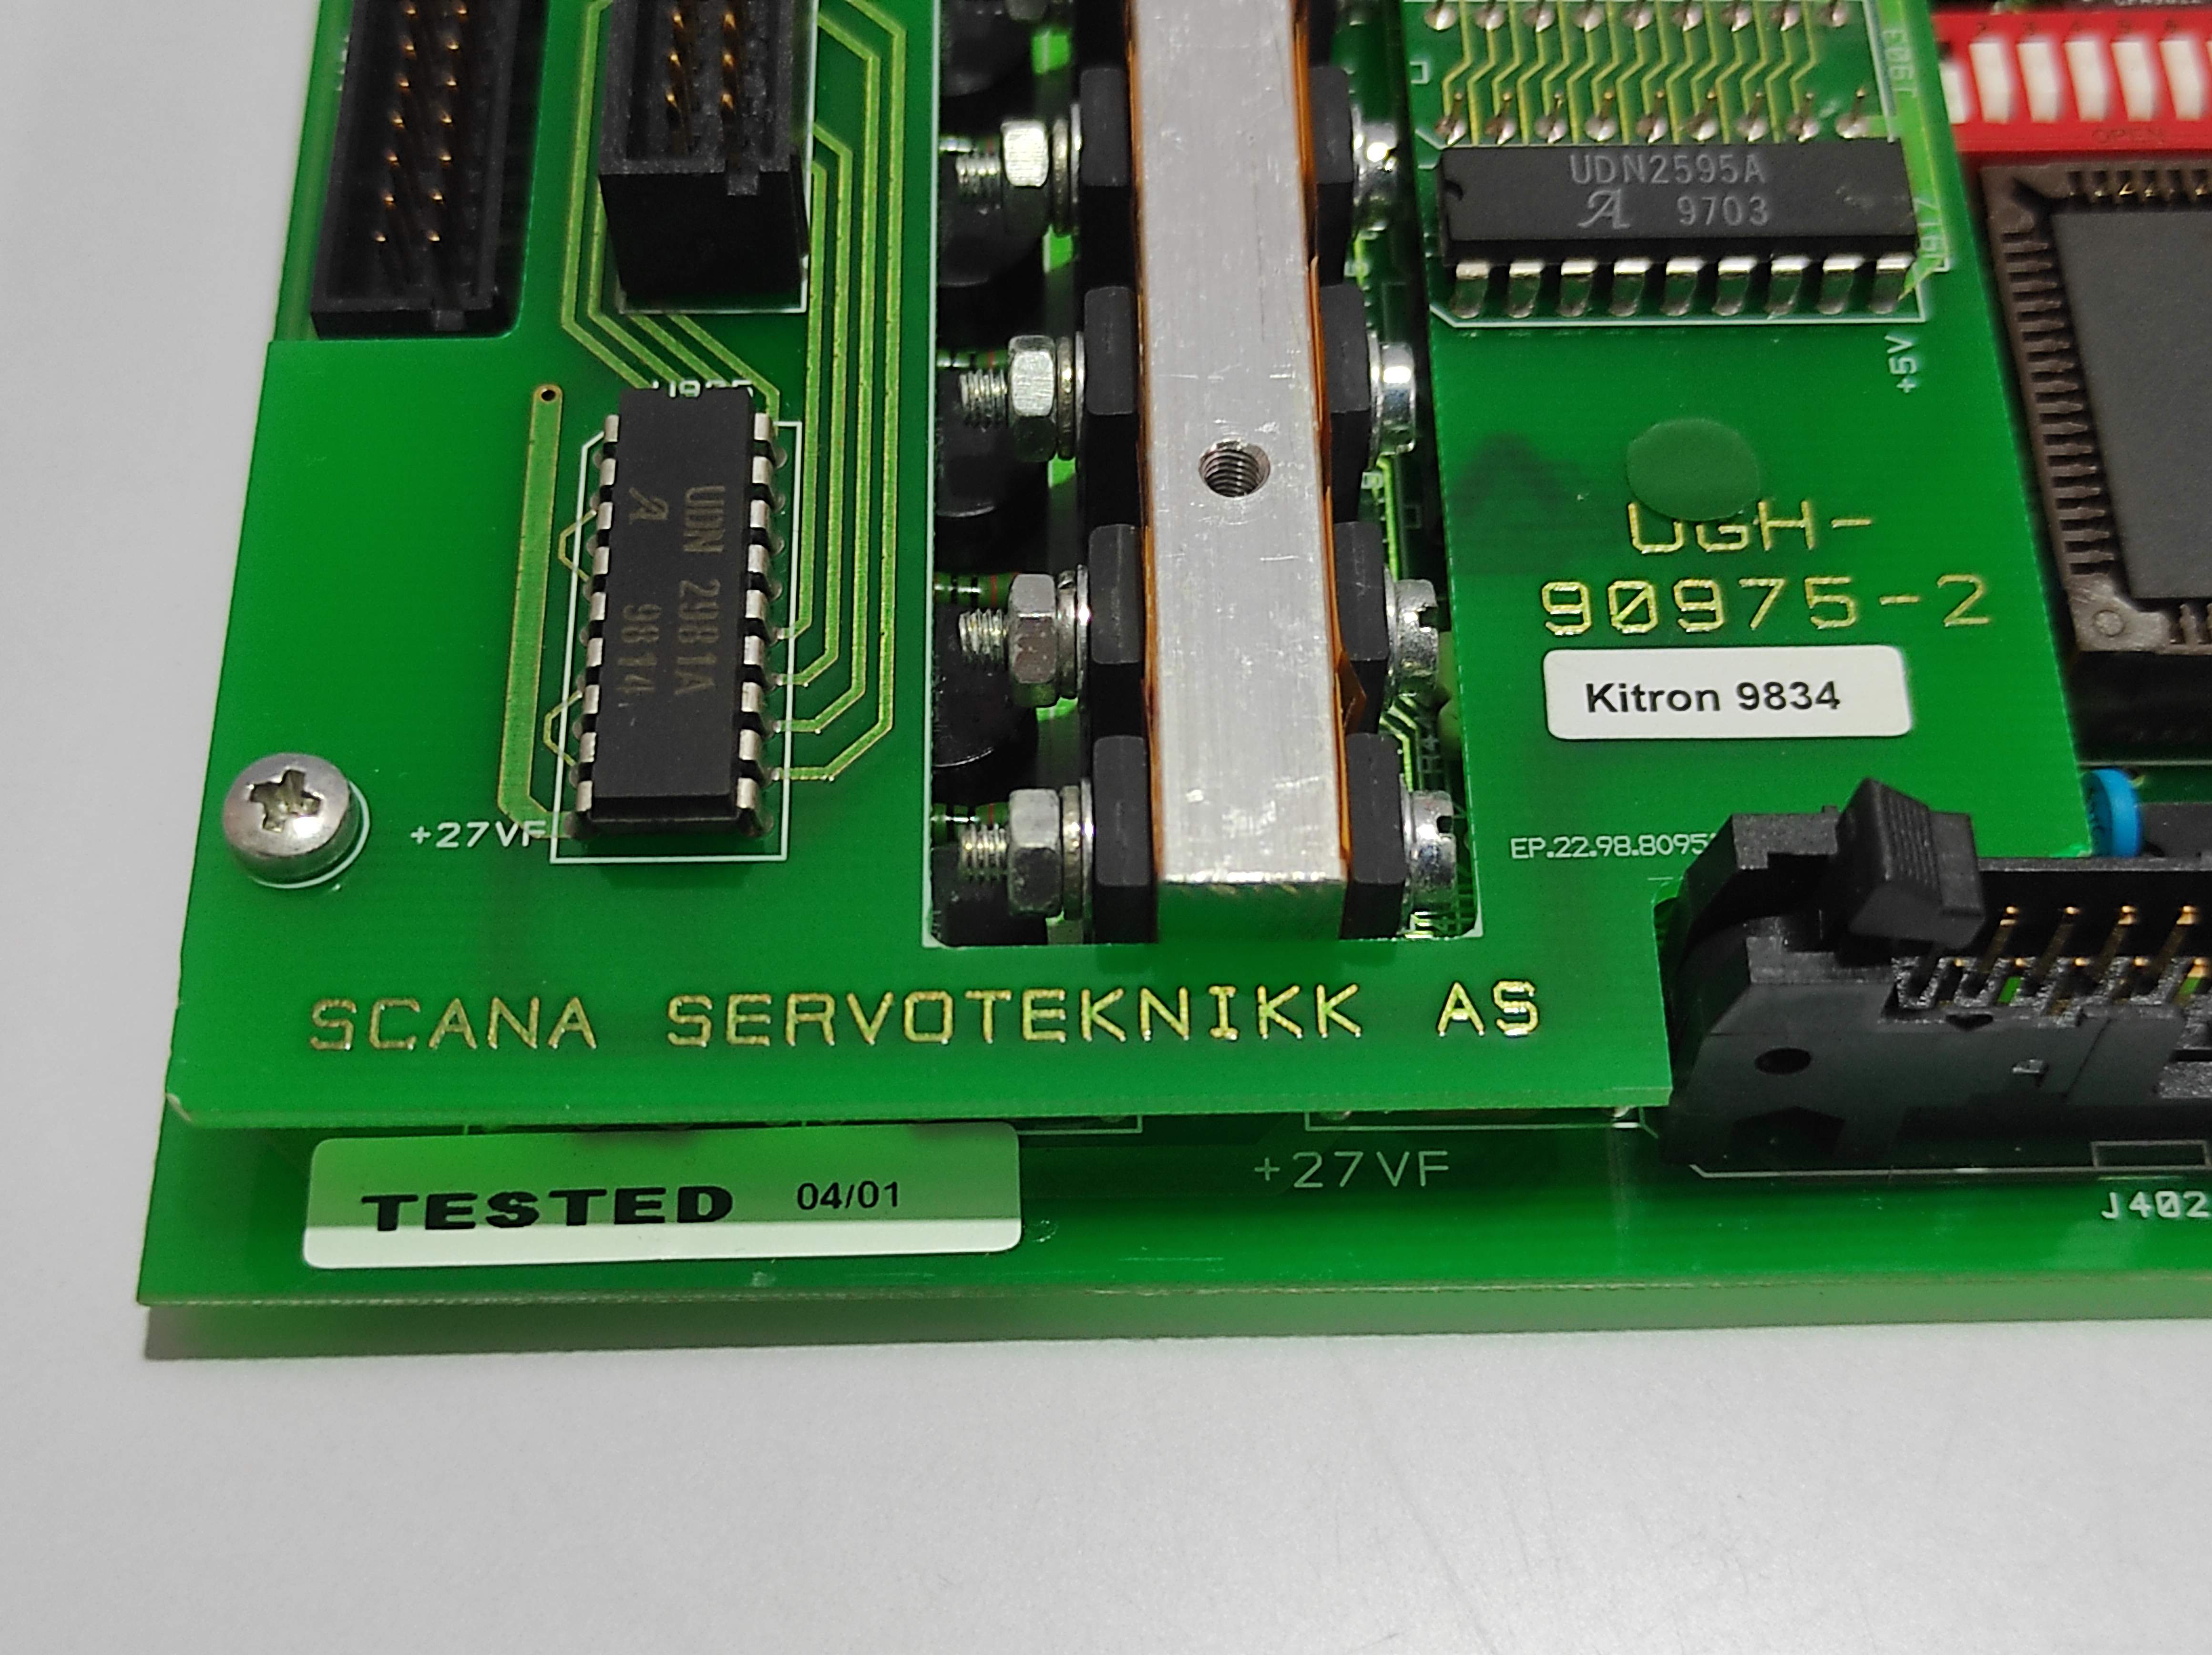 Scana Servoteknikk 34002 PCB BCD-809 Complete With EPROM